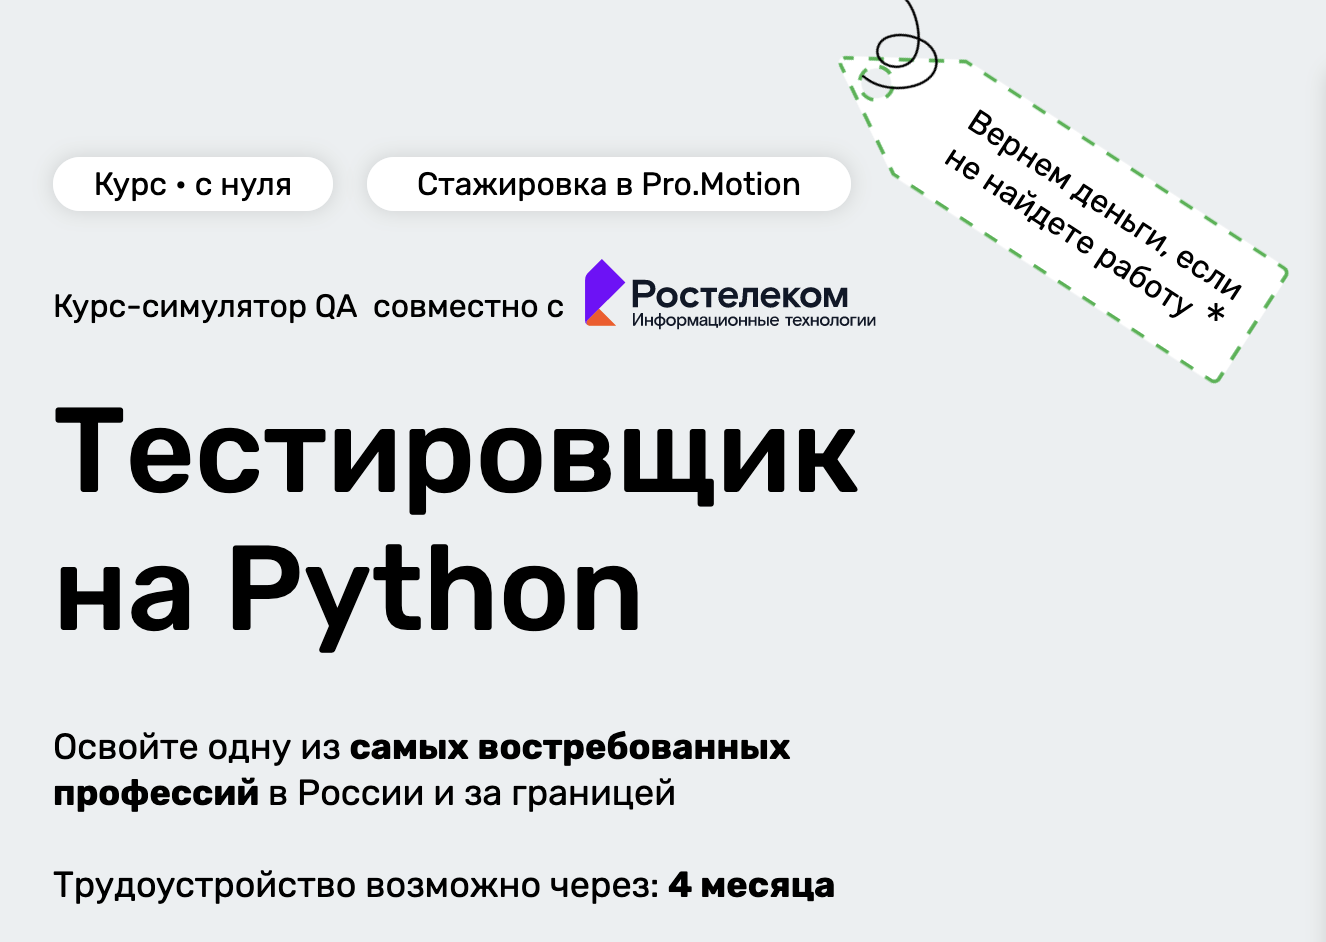 "Тестировщик на Python" от Skillfactory